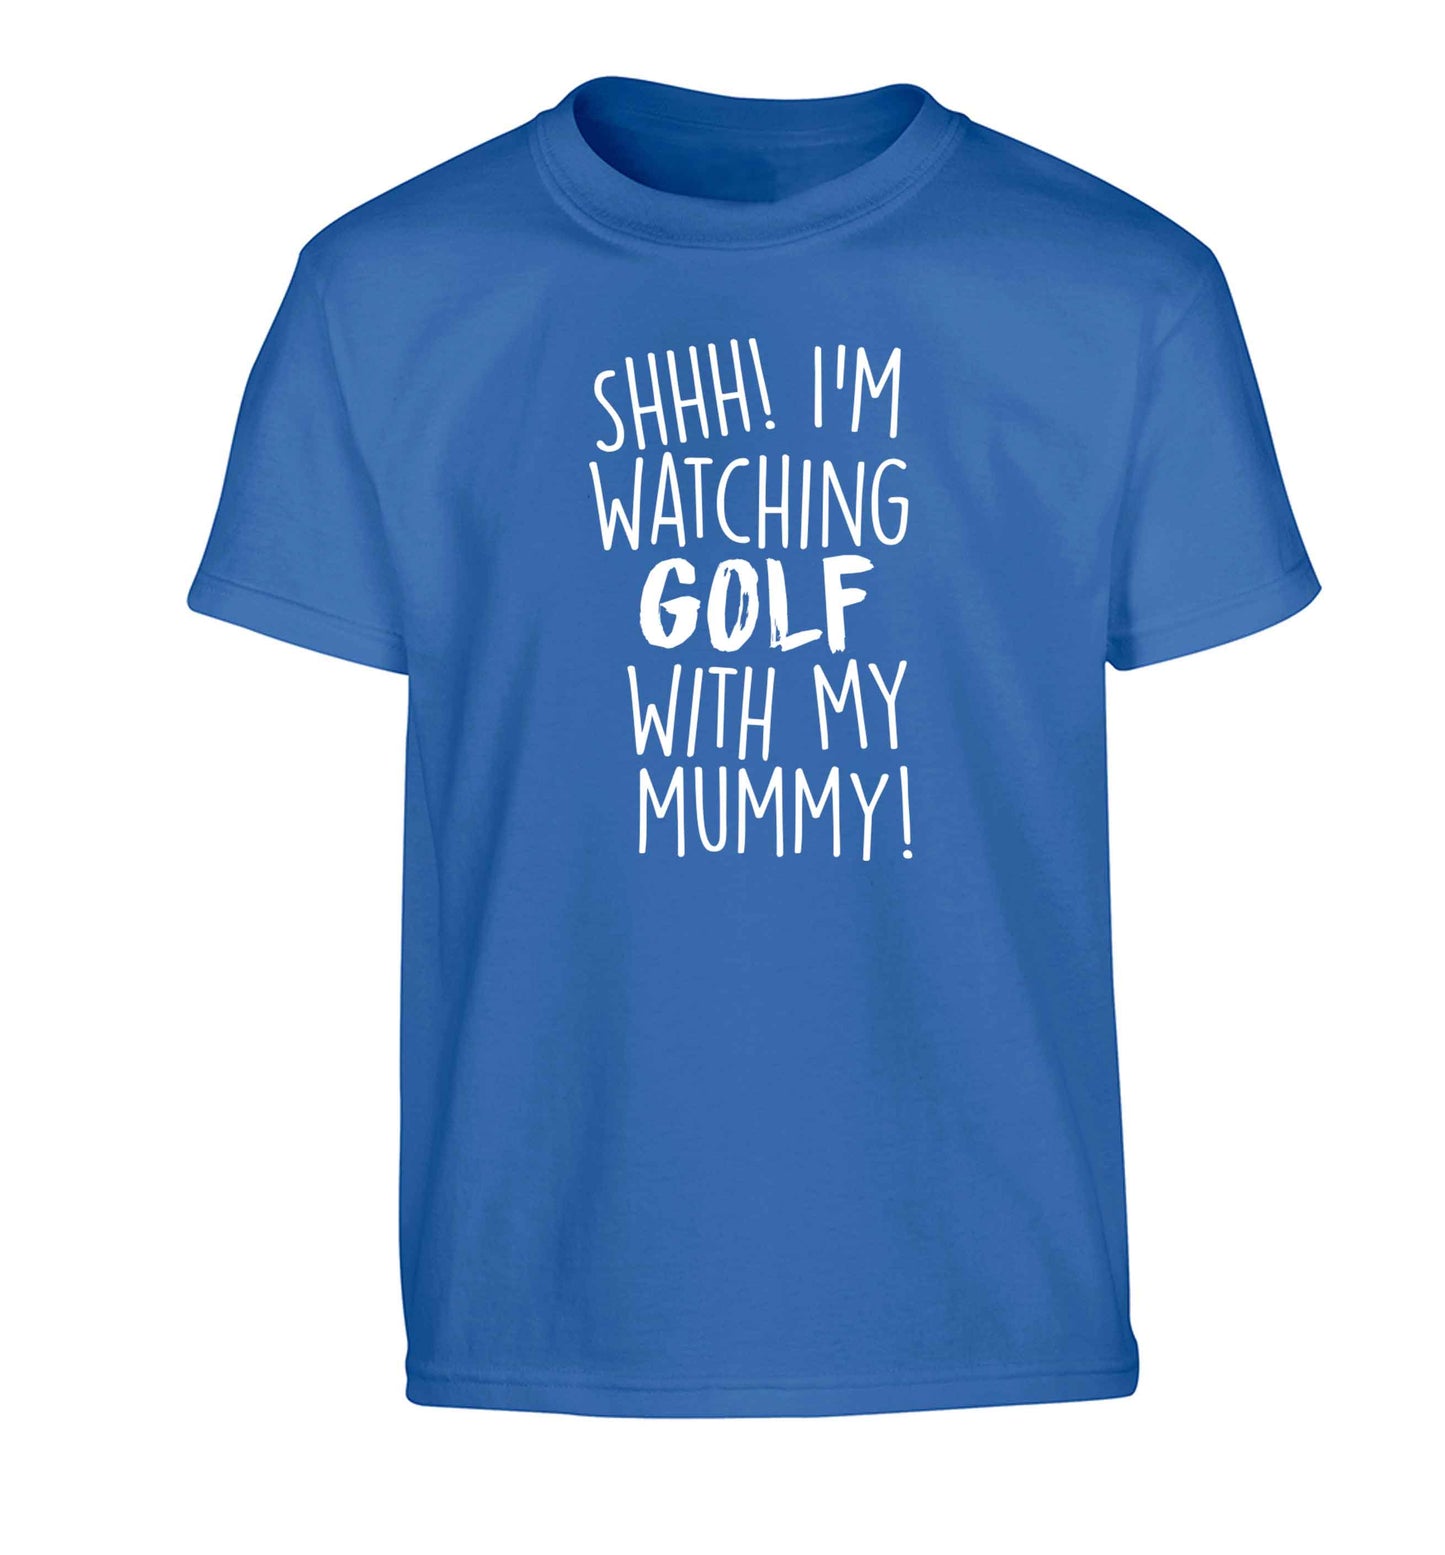 Shh I'm watching golf with my mummy Children's blue Tshirt 12-13 Years